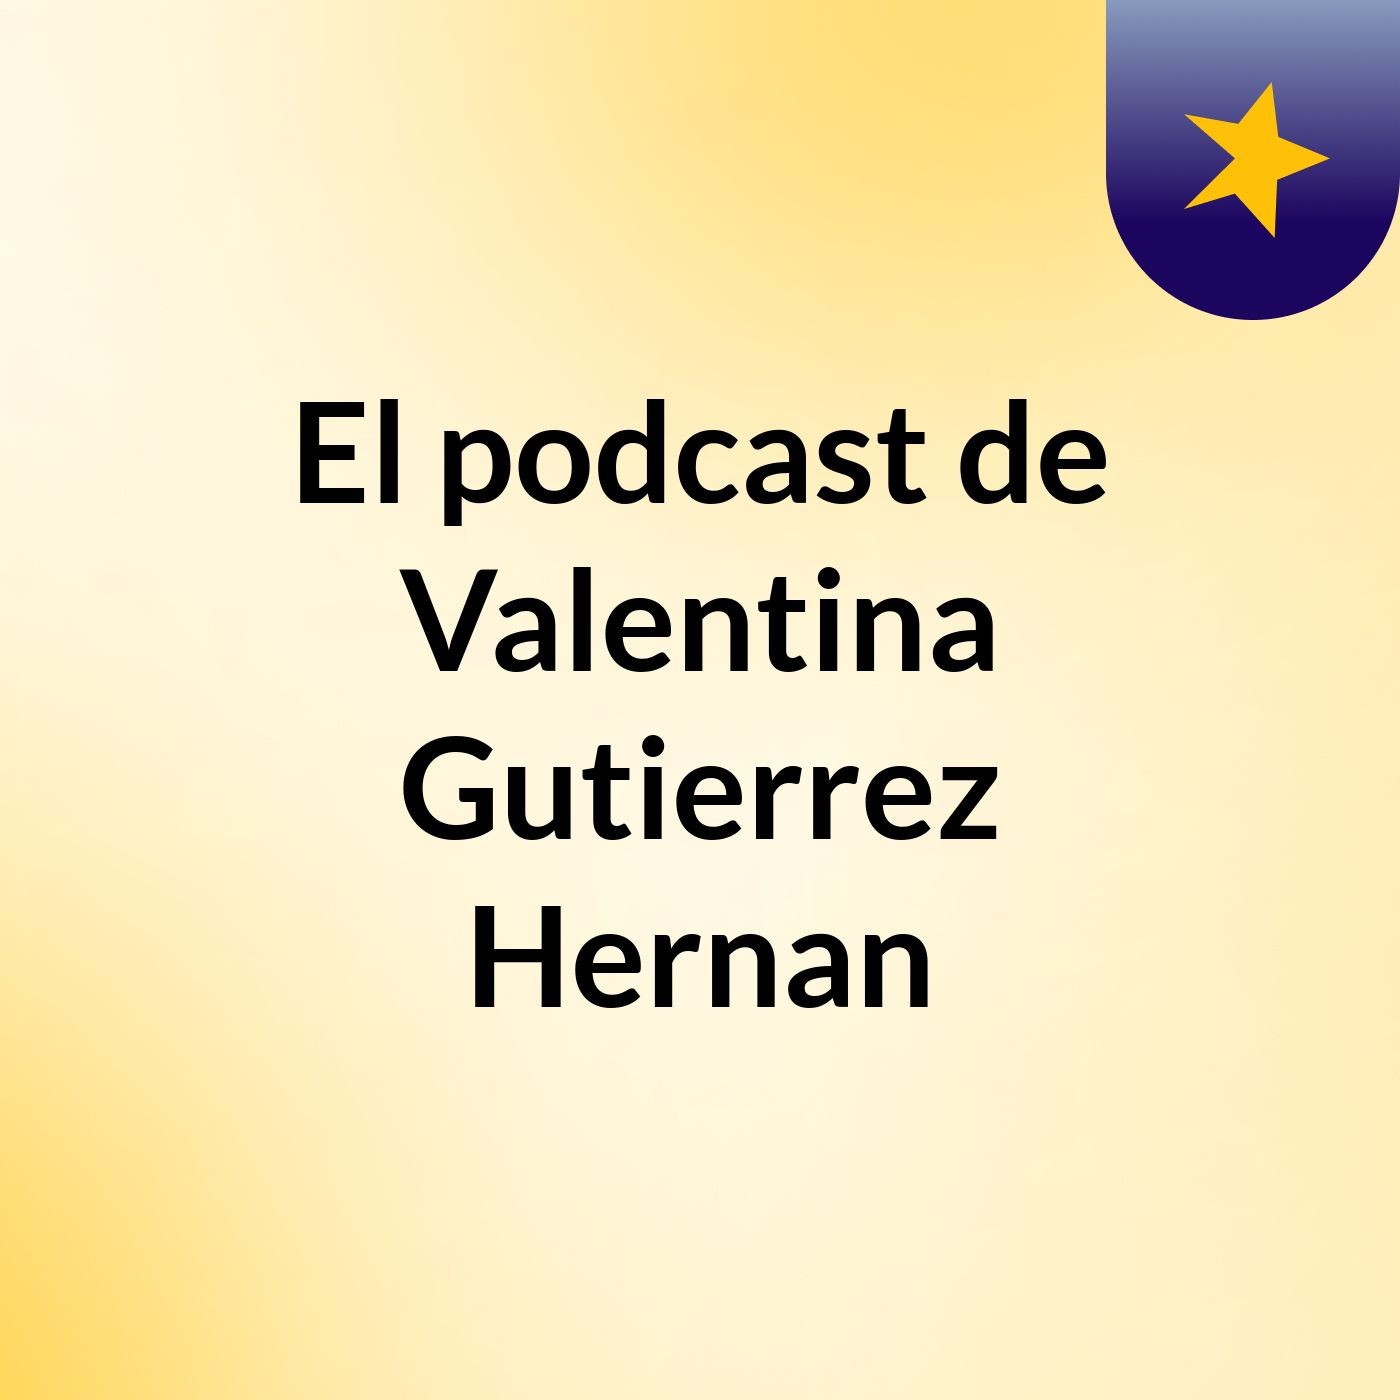 El podcast de Valentina Gutierrez Hernan